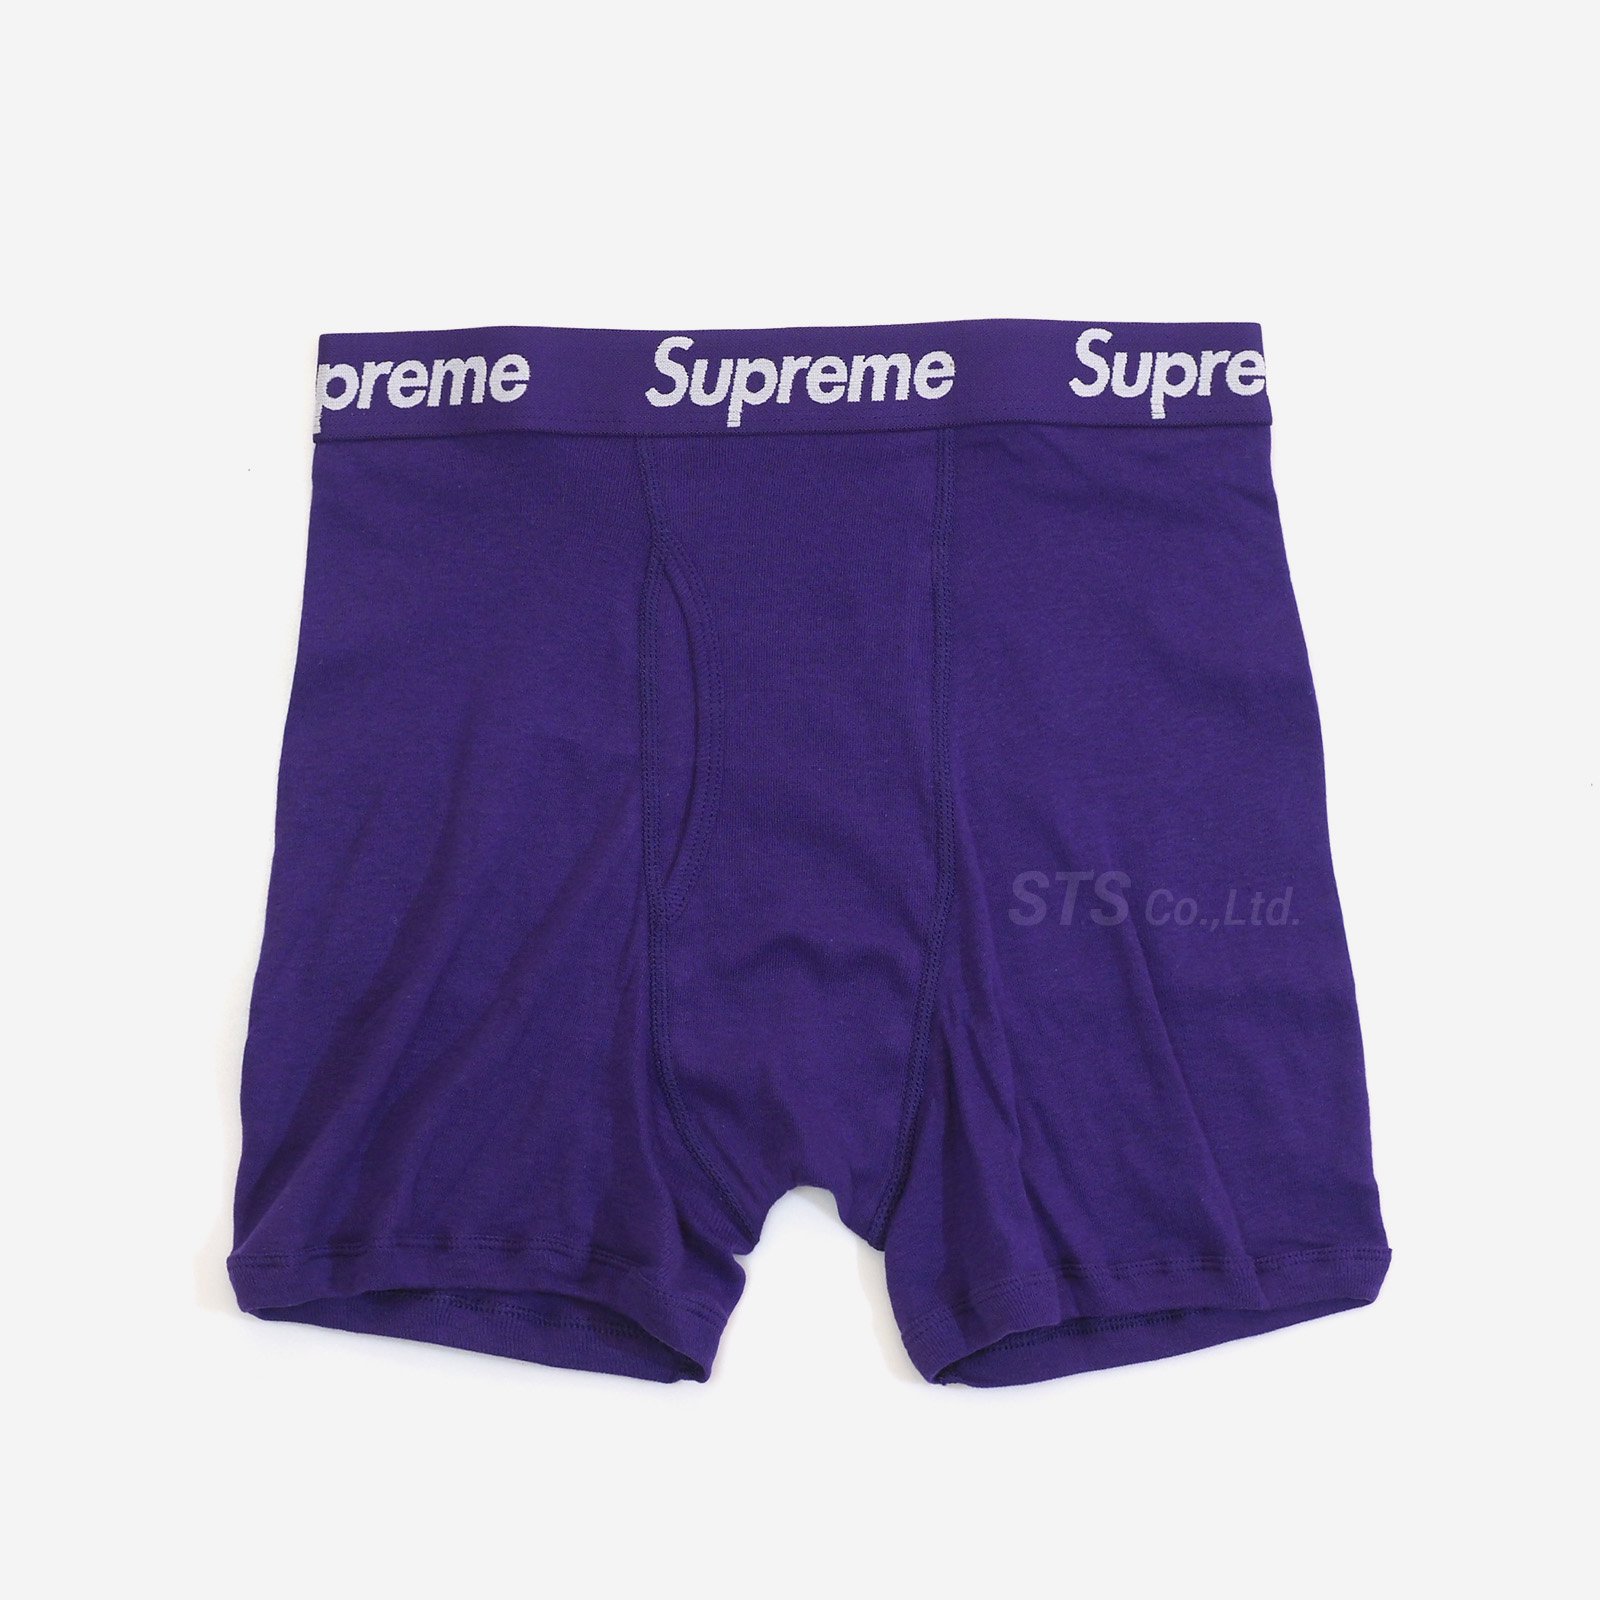 Supreme/Hanes Boxer Briefs (2 Pack) - Purple - UG.SHAFT